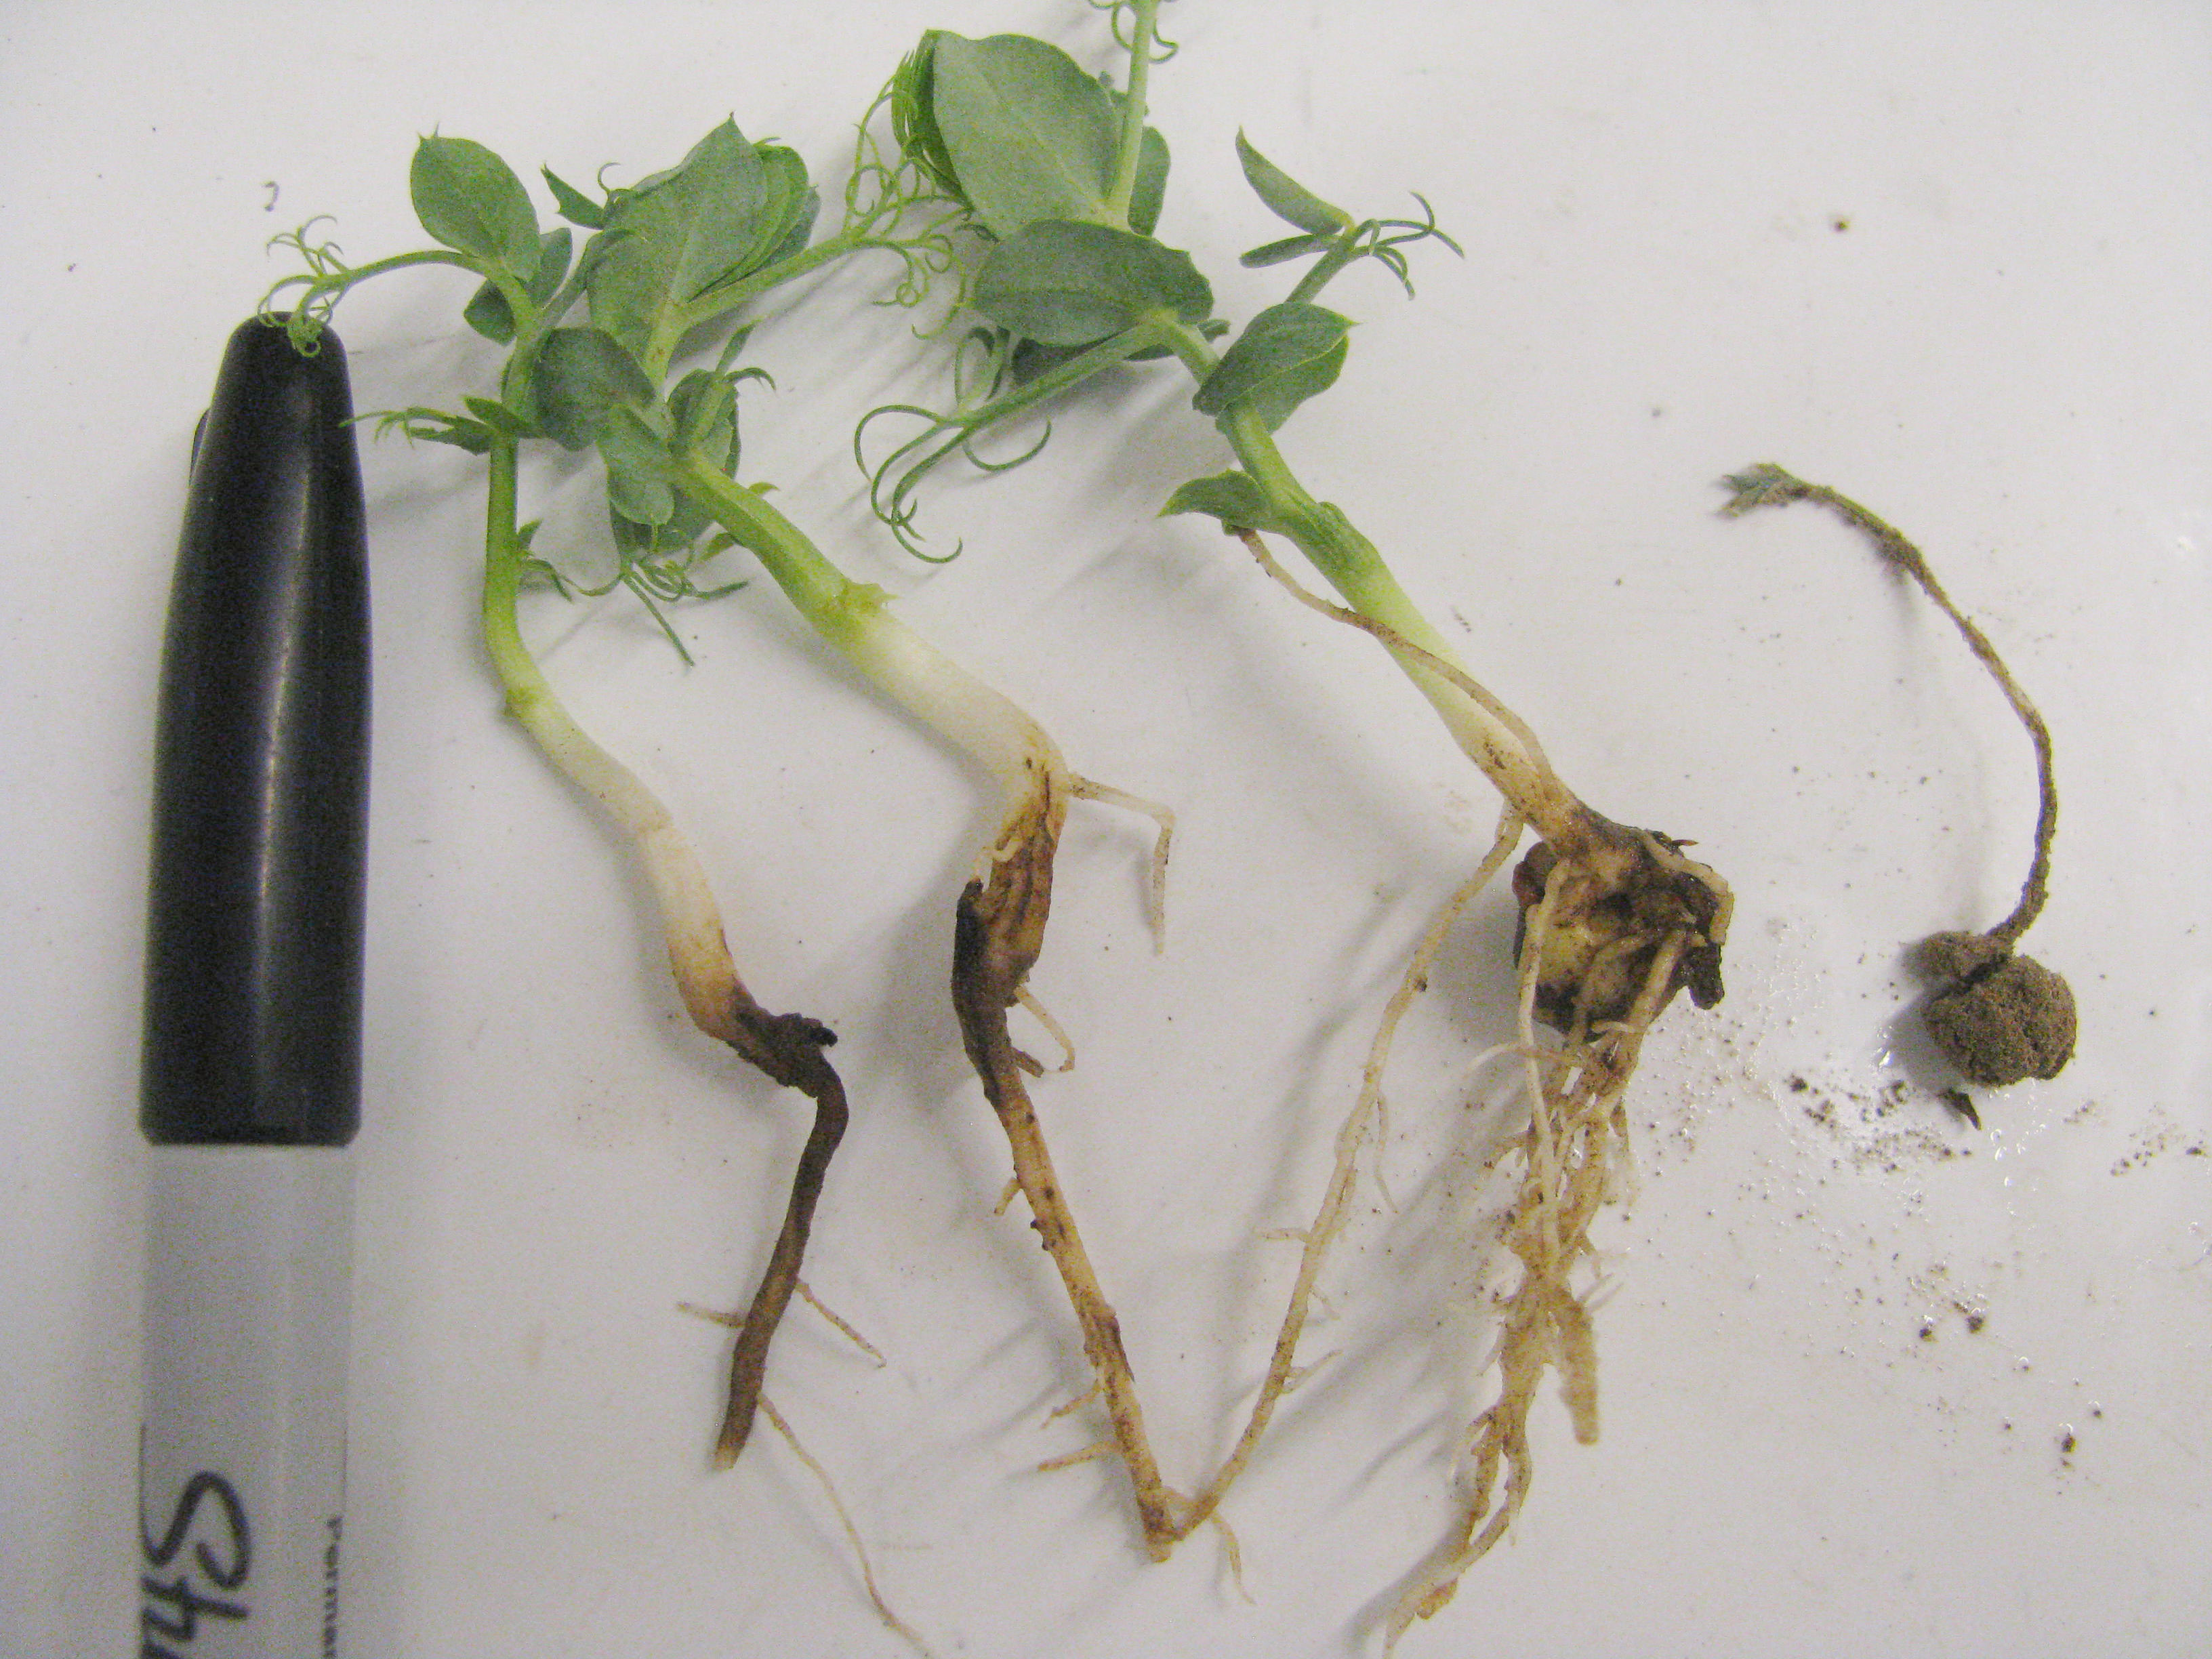 Damage to pea seedlings caused by the seedcorn maggot.